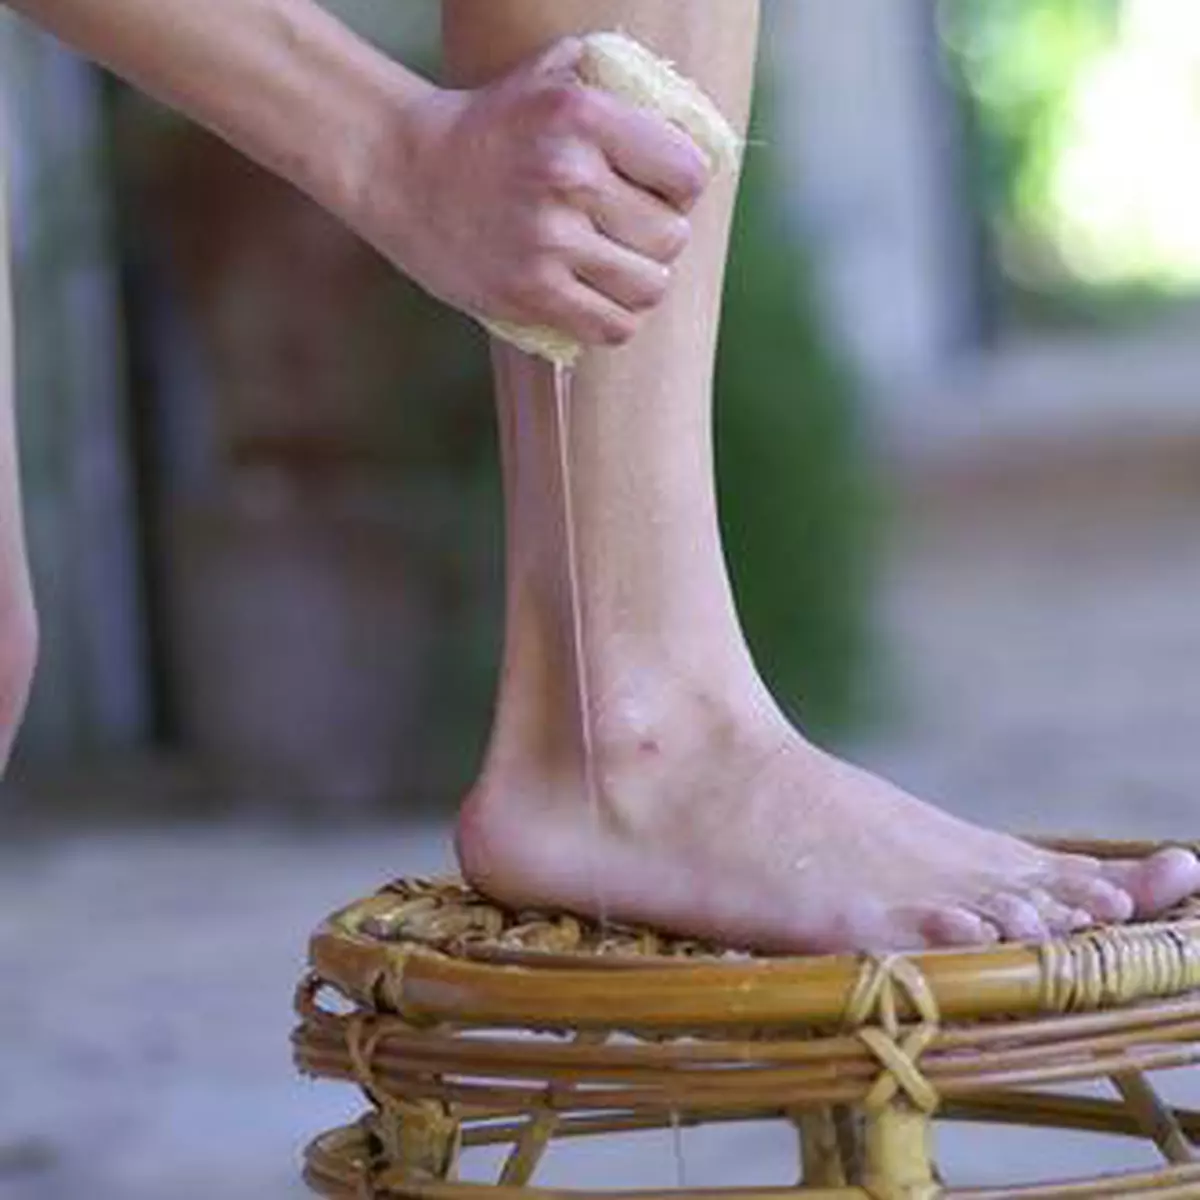 Picioare care transpira excesiv/abundent: cauze, tratamente